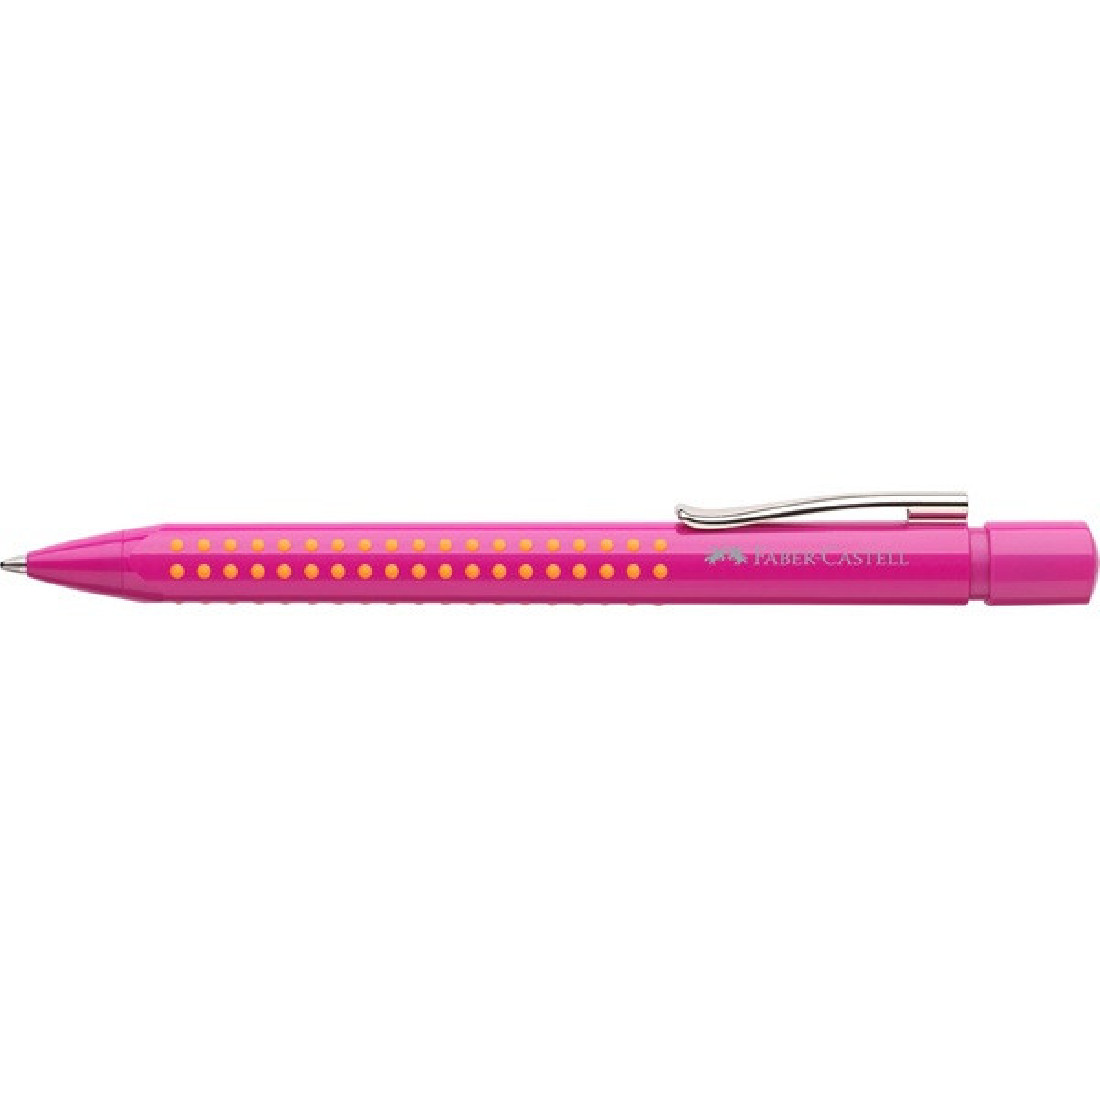 Ballpoint pen GRIP 2010 M pink-orange 243901 Faber Castell